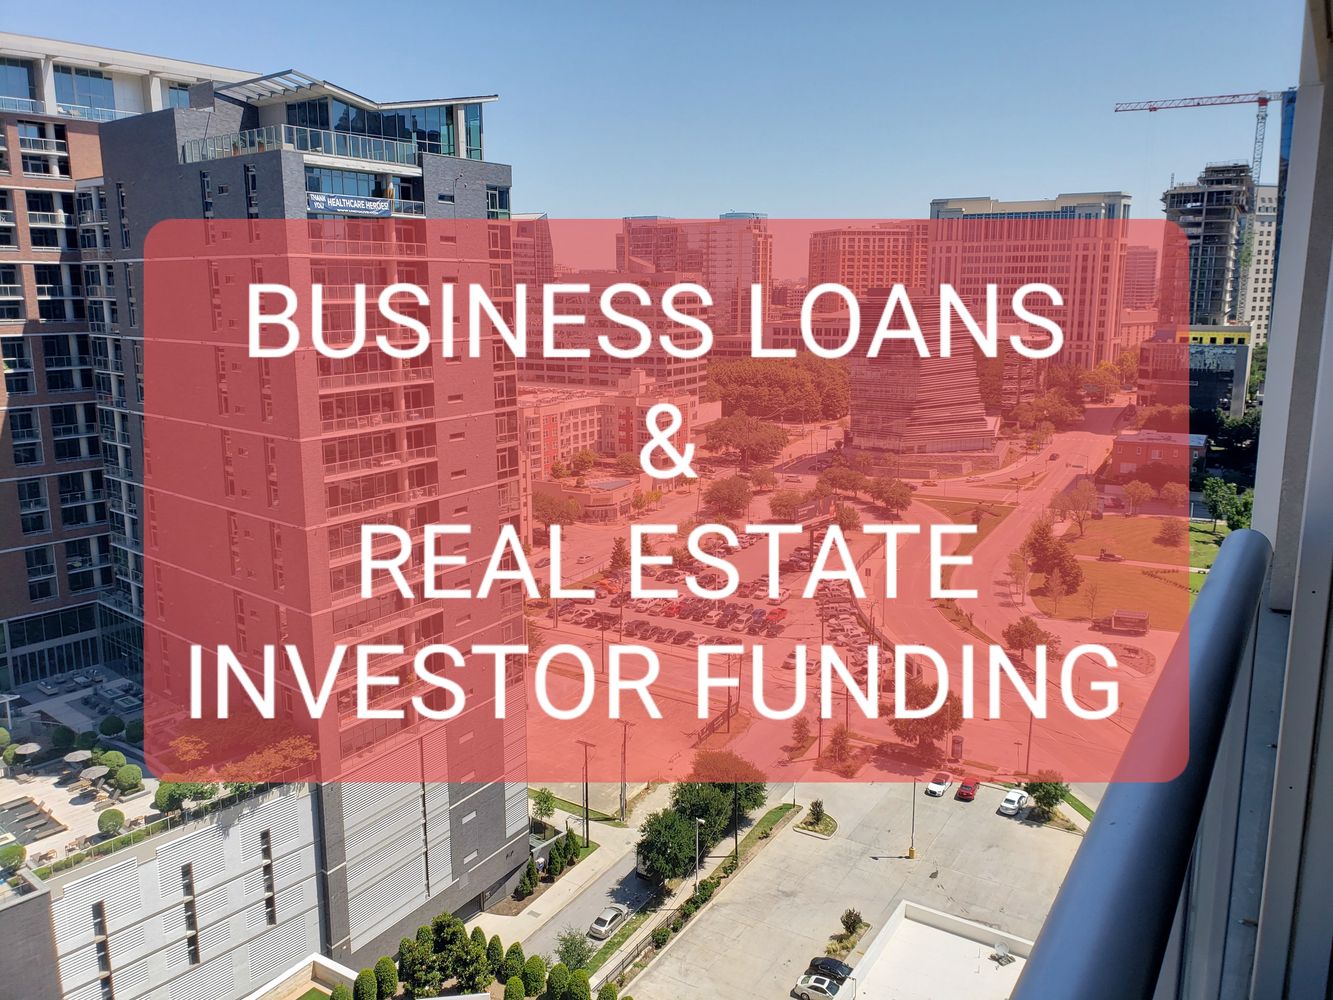 business loans and real estate investor funding. SBA loans, bank loans, hard money loans, finance